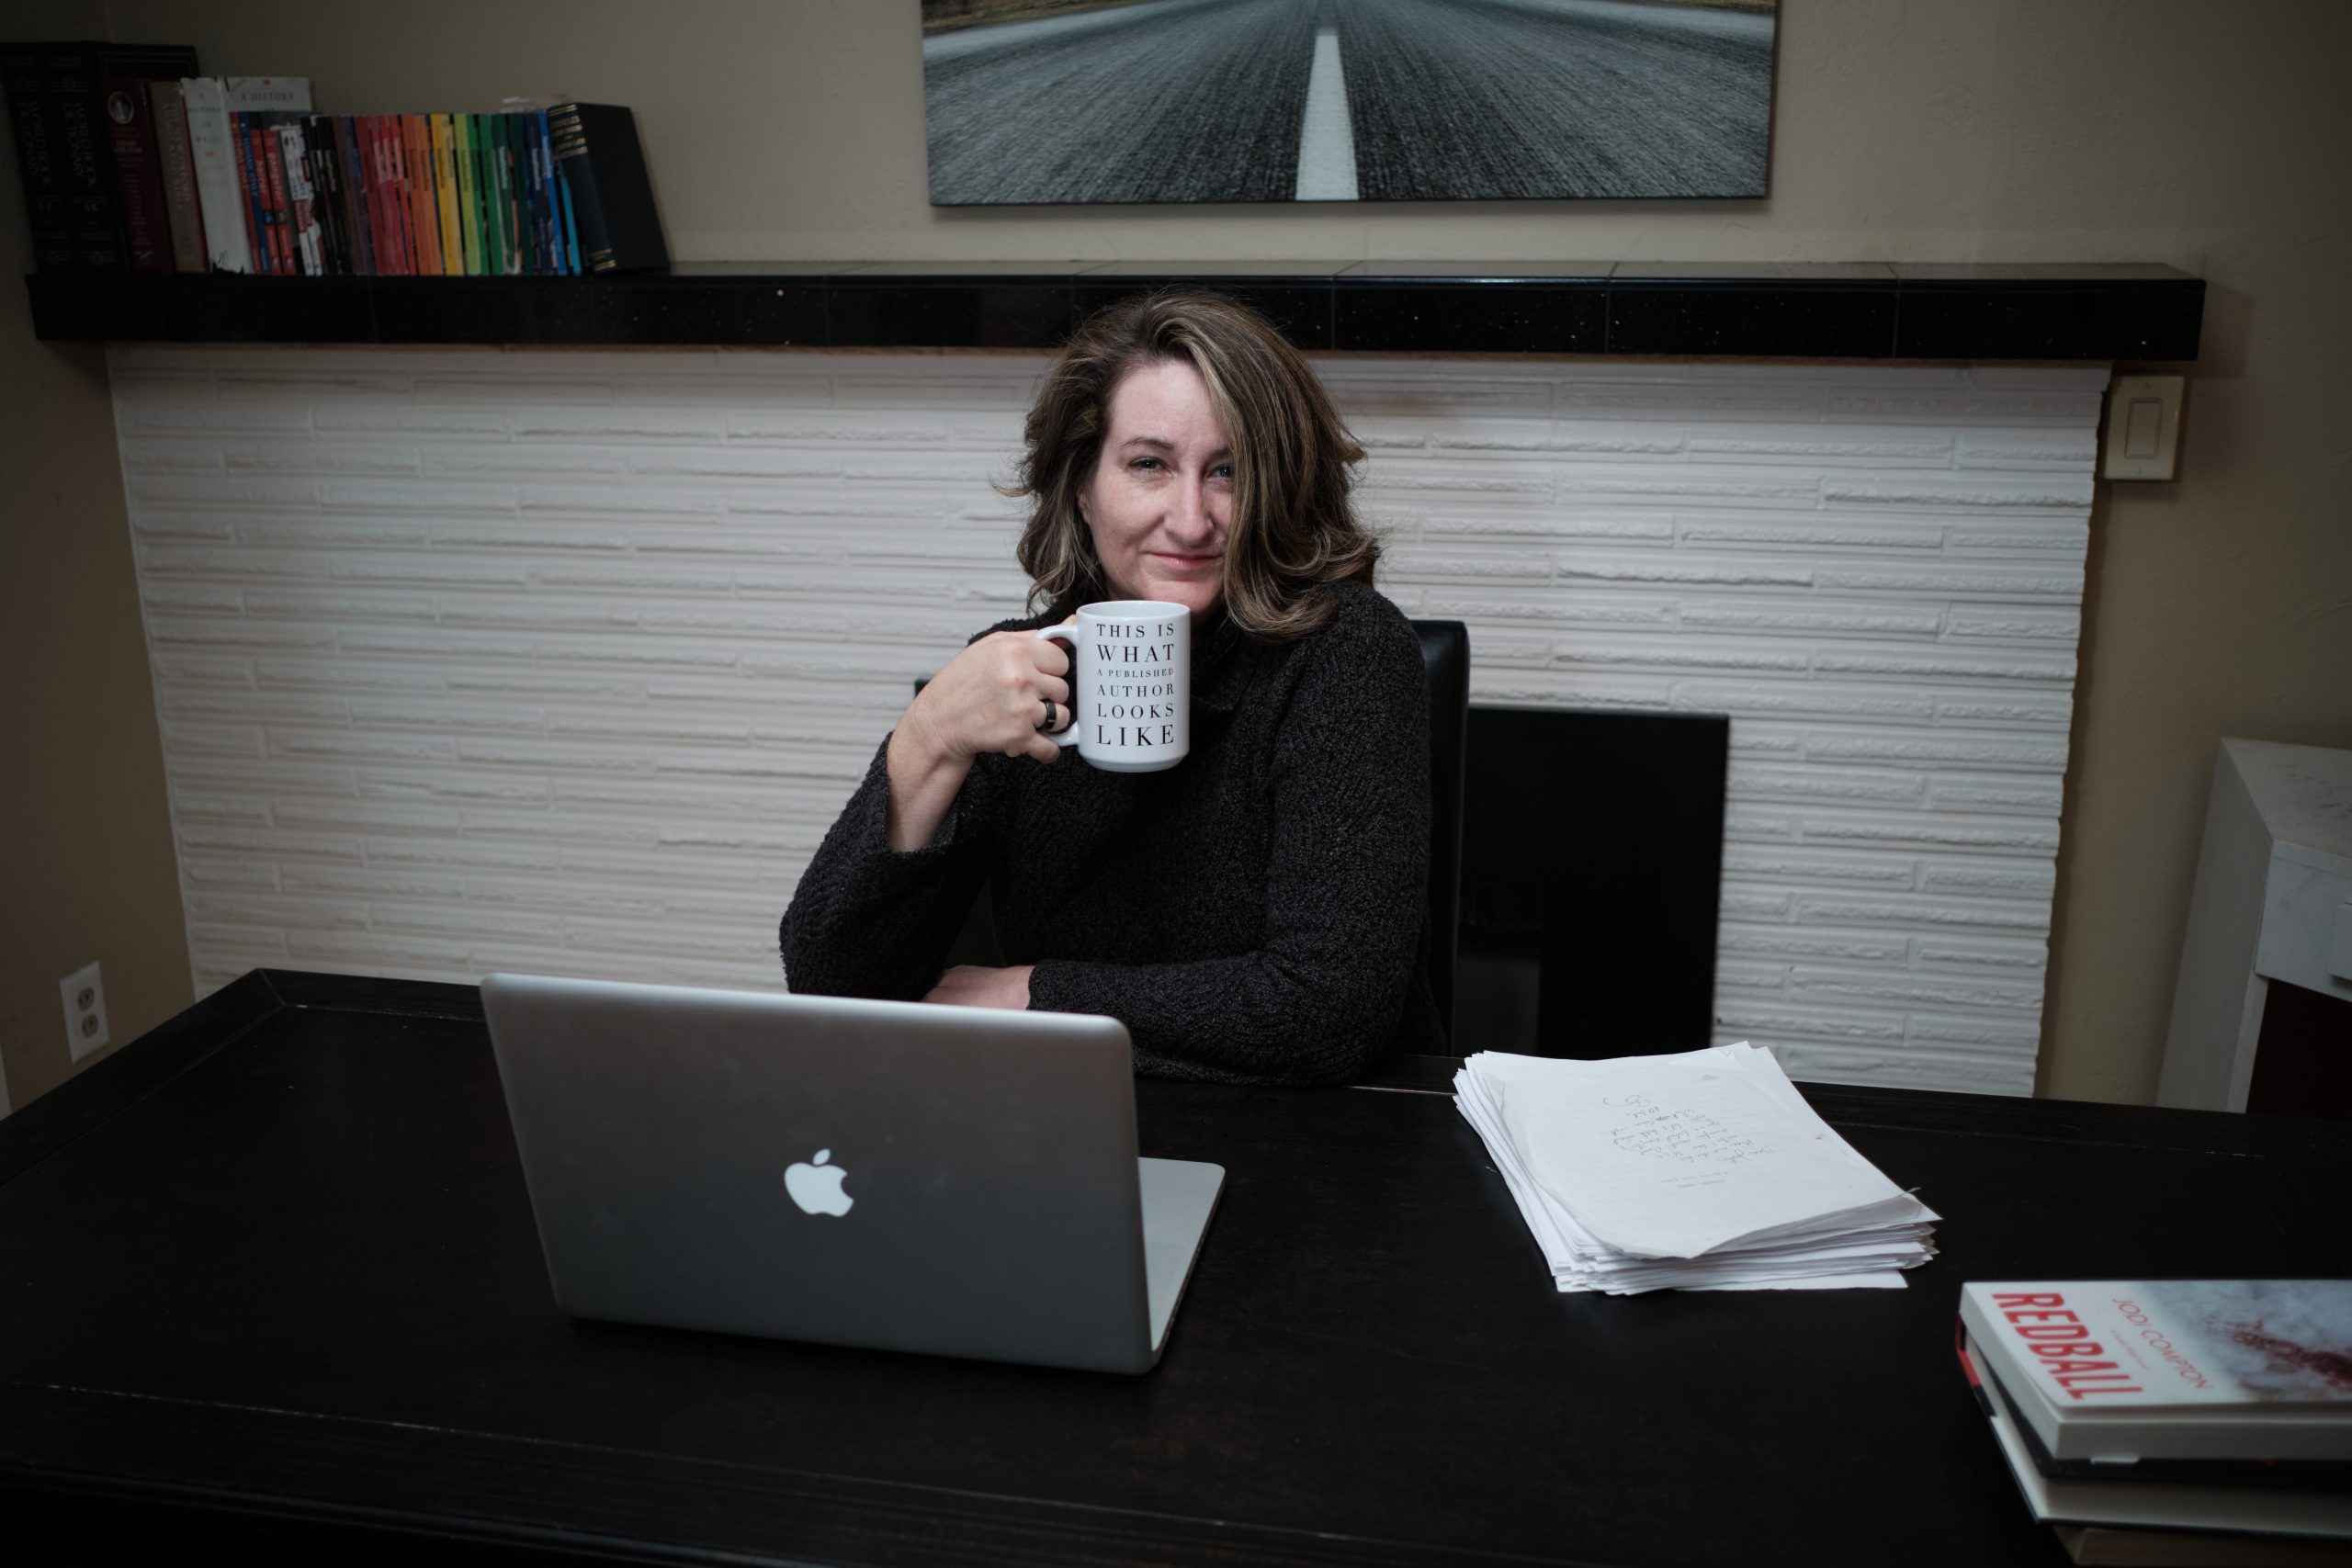 jodi compton at a long desk, holding coffe mug